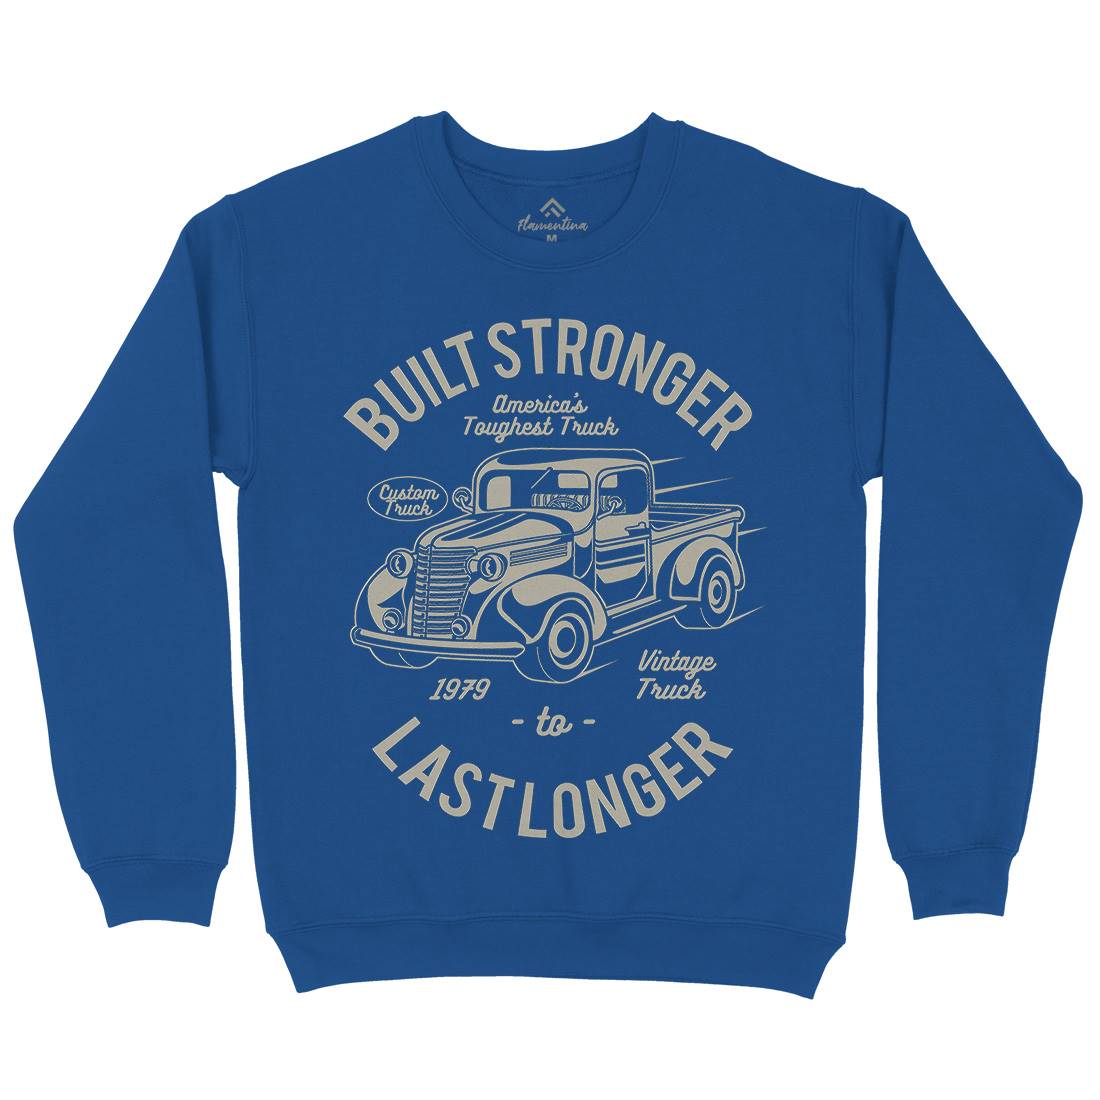 Built Stronger Mens Crew Neck Sweatshirt Cars A023